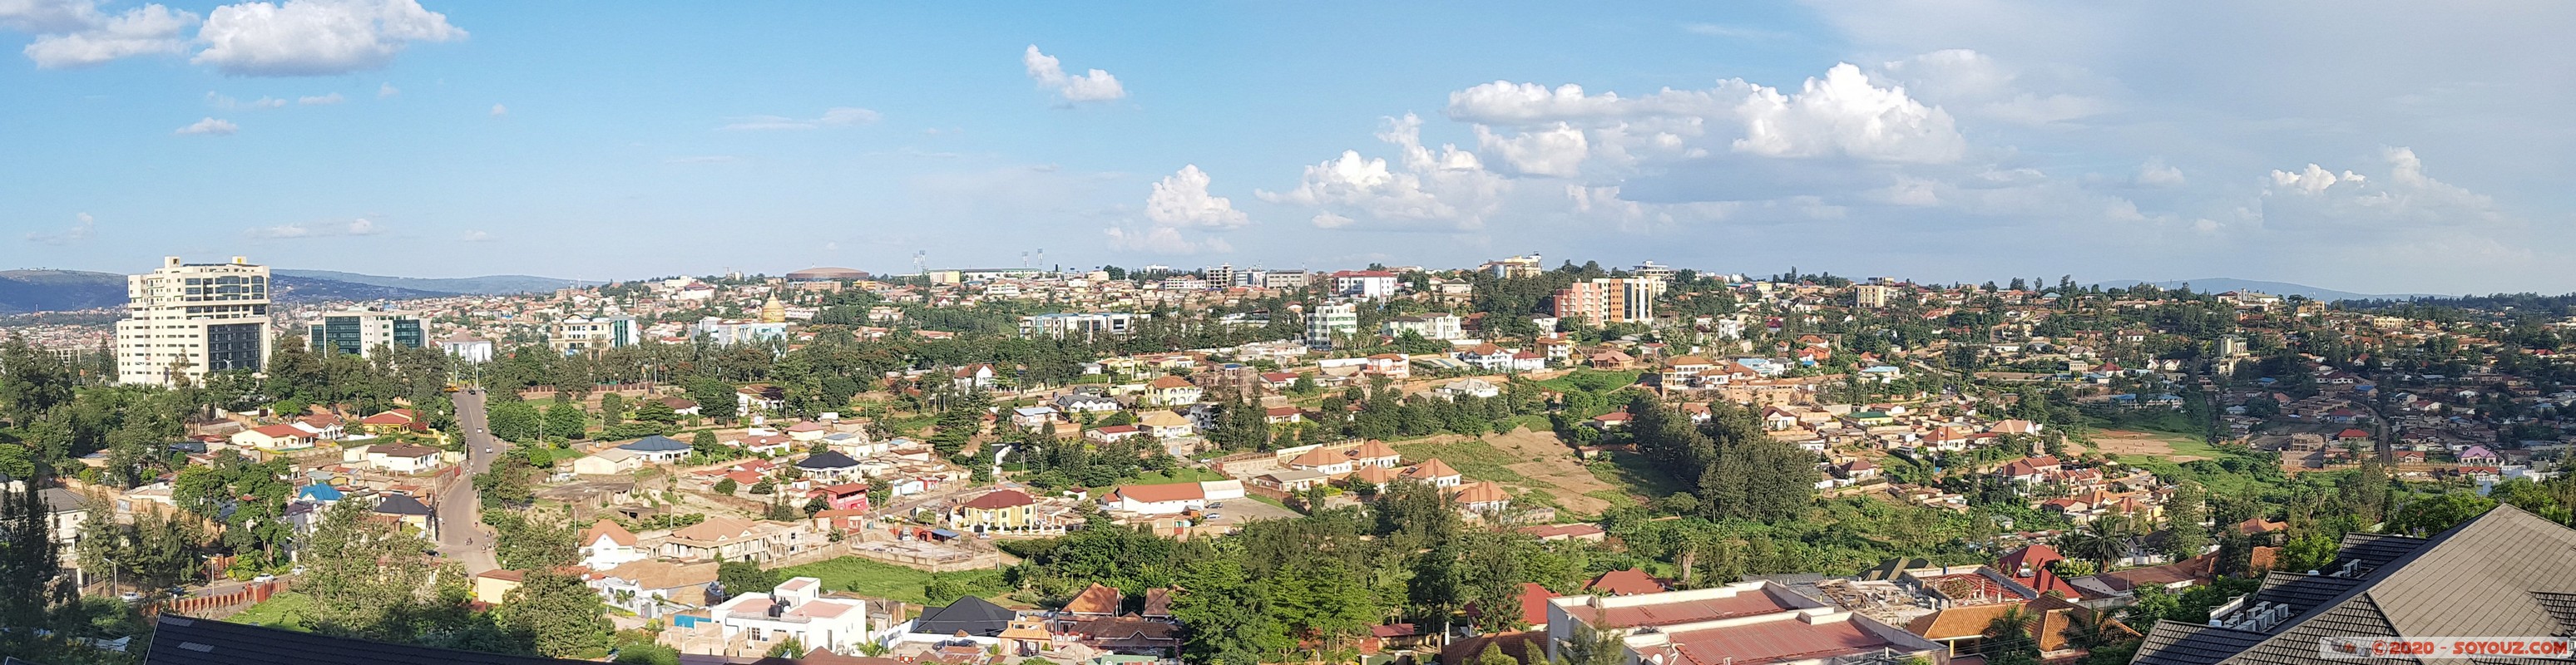 Kigali - Panorama from Lemigo Hotel
Mots-clés: Kigali Province Kimihurura RWA Rwanda Kigali Lemigo Hotel panorama